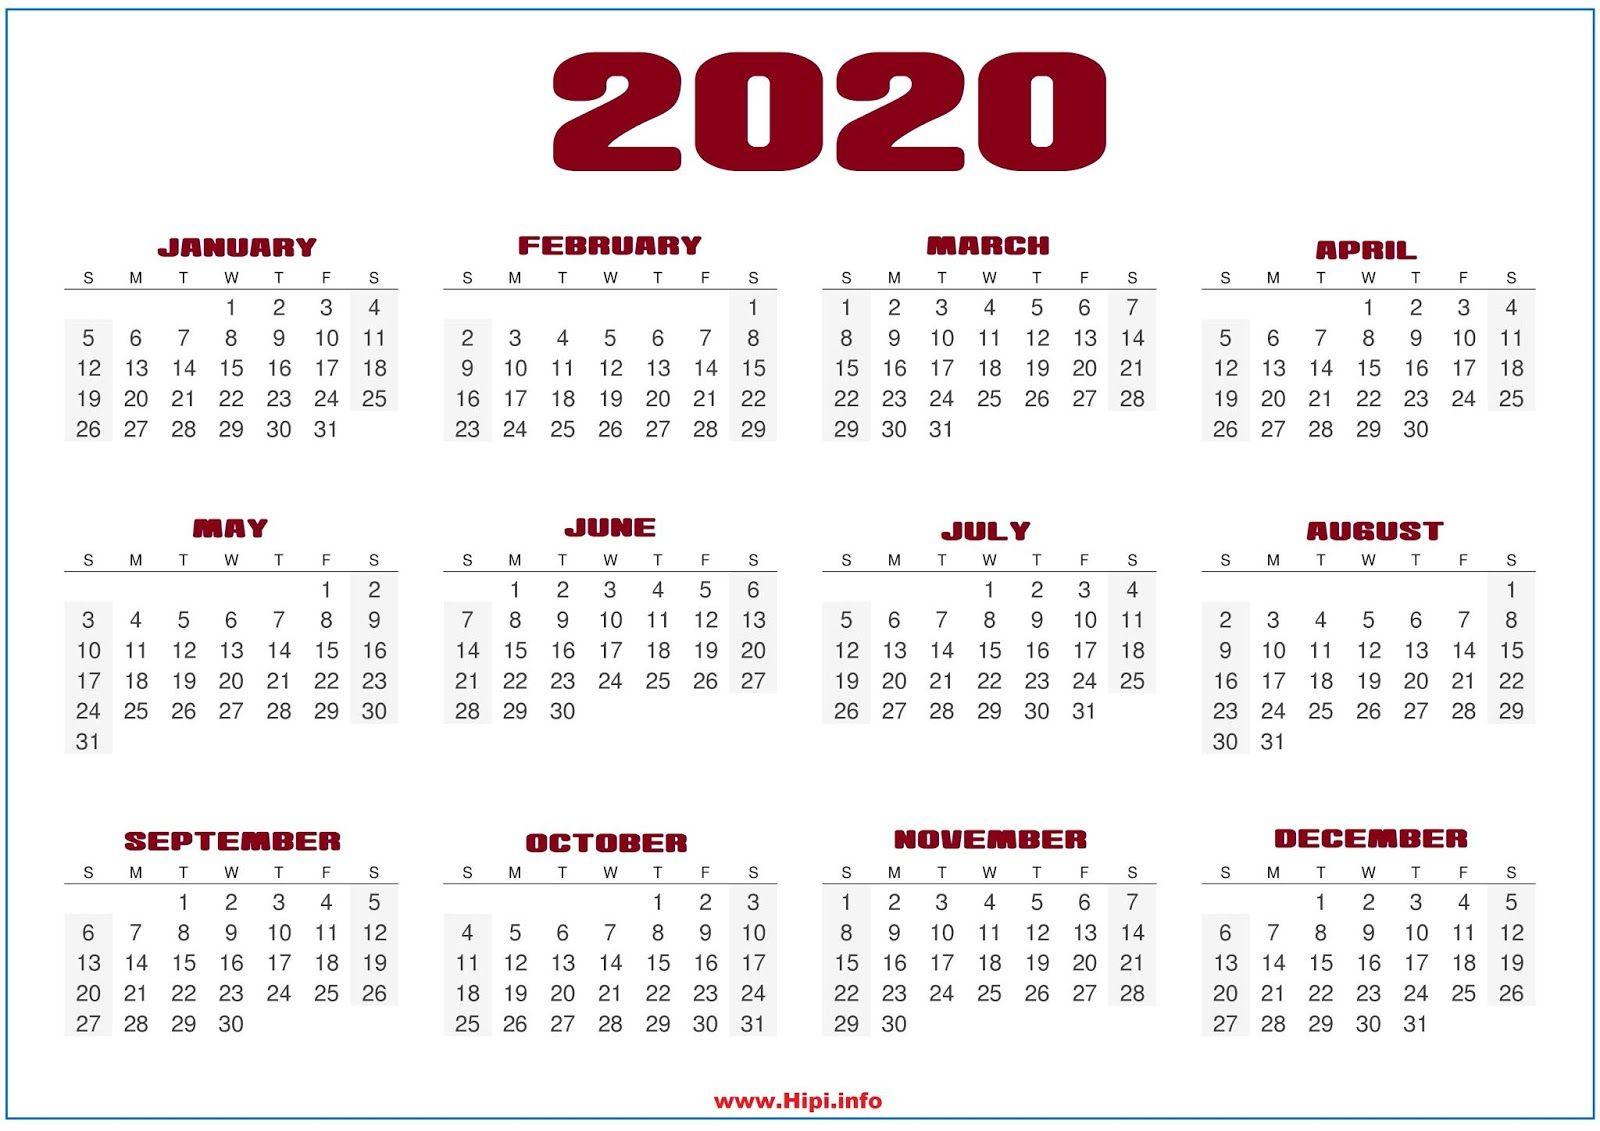 June 2020 Calendar Wallpaper Free June 2020 Calendar